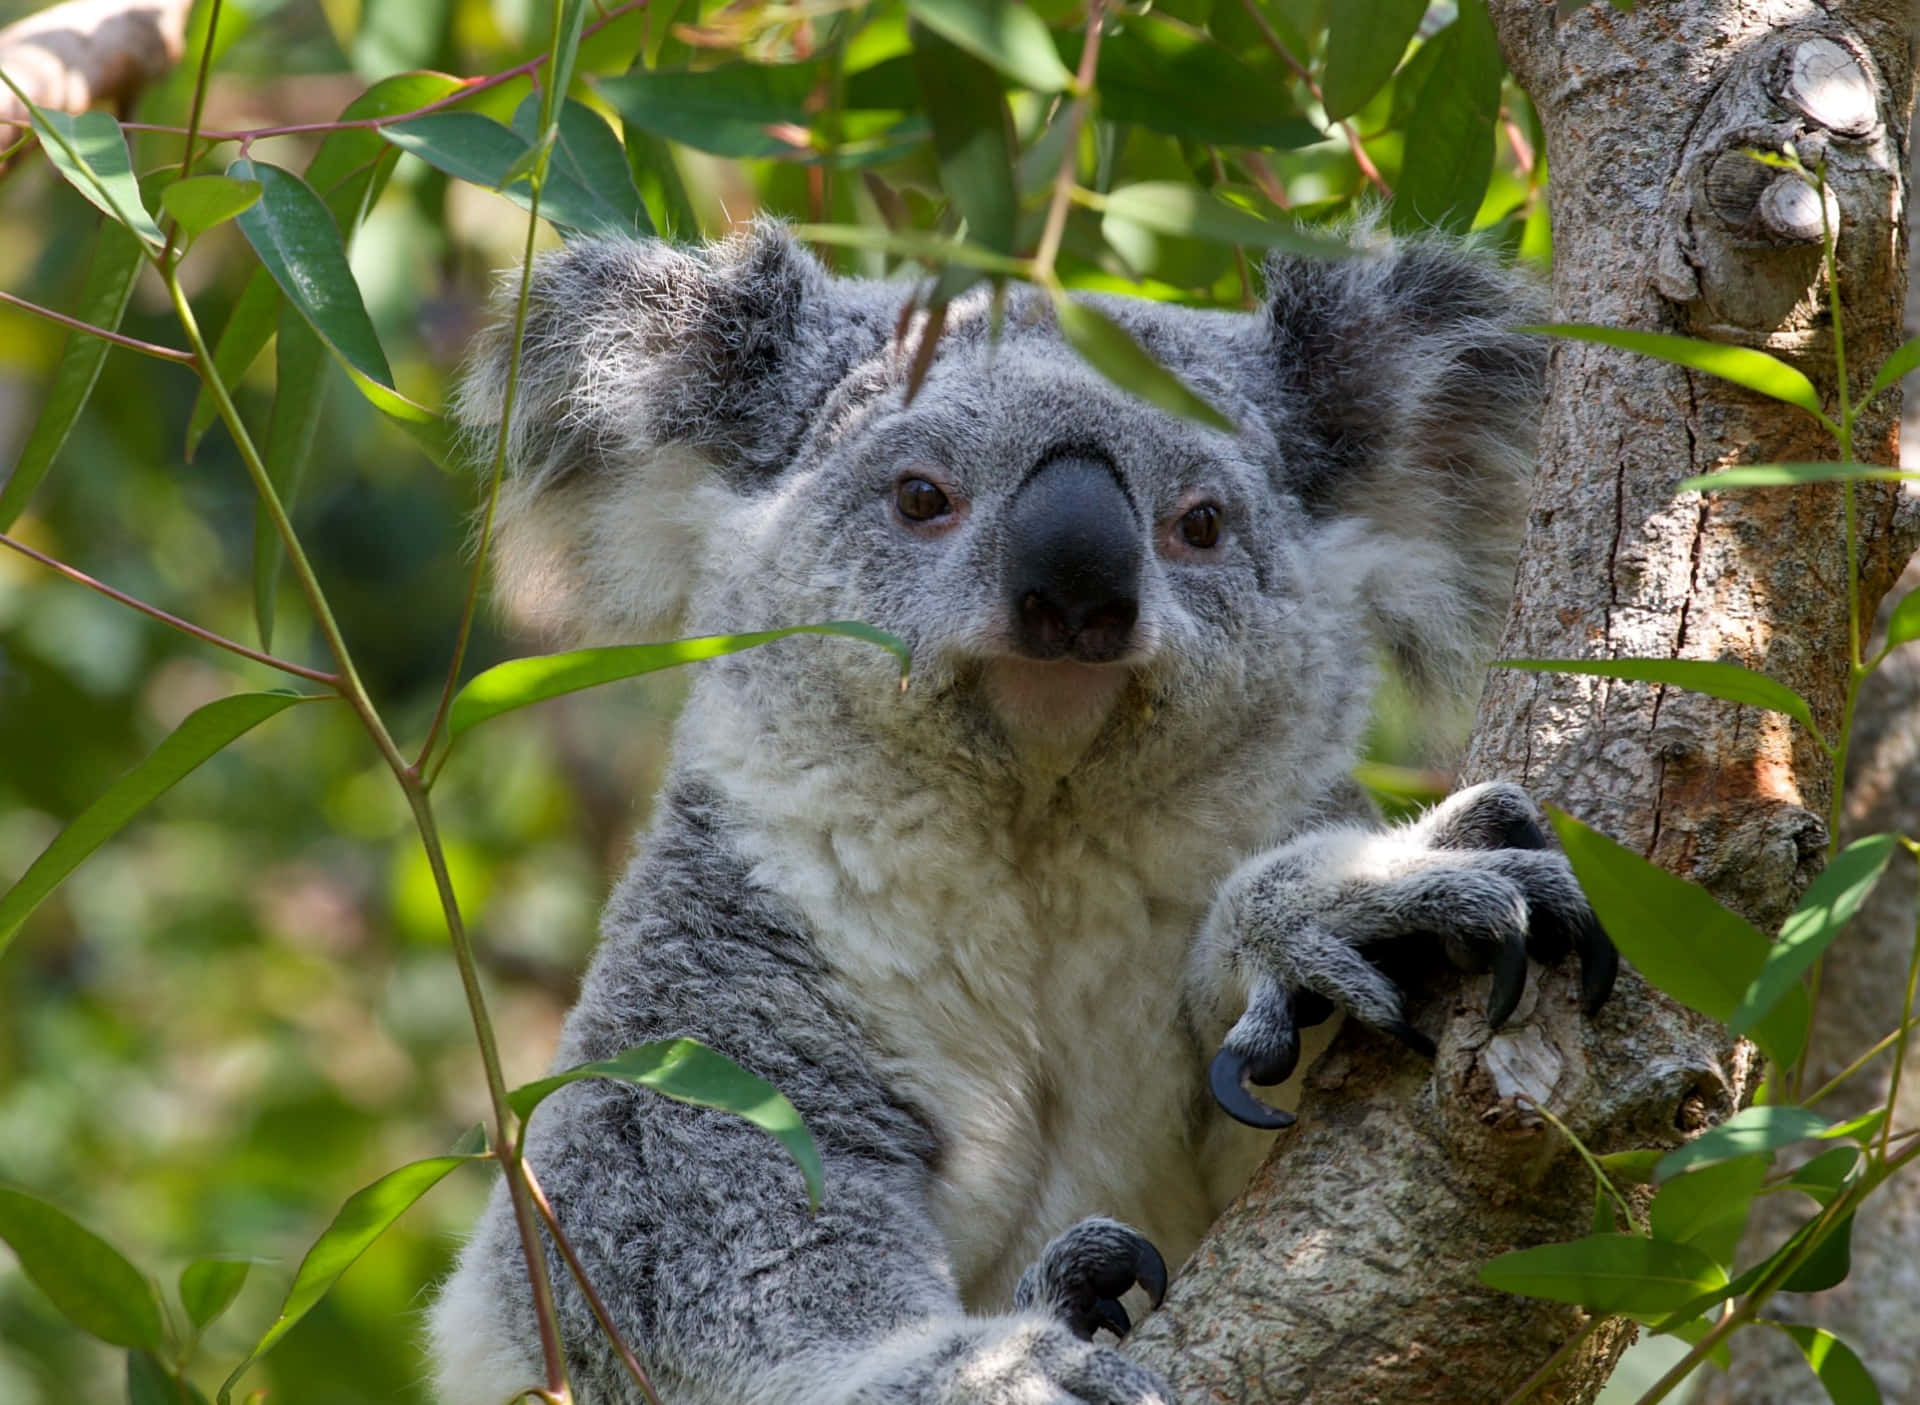 Cute Koala Bear enjoying a nap in the tree.